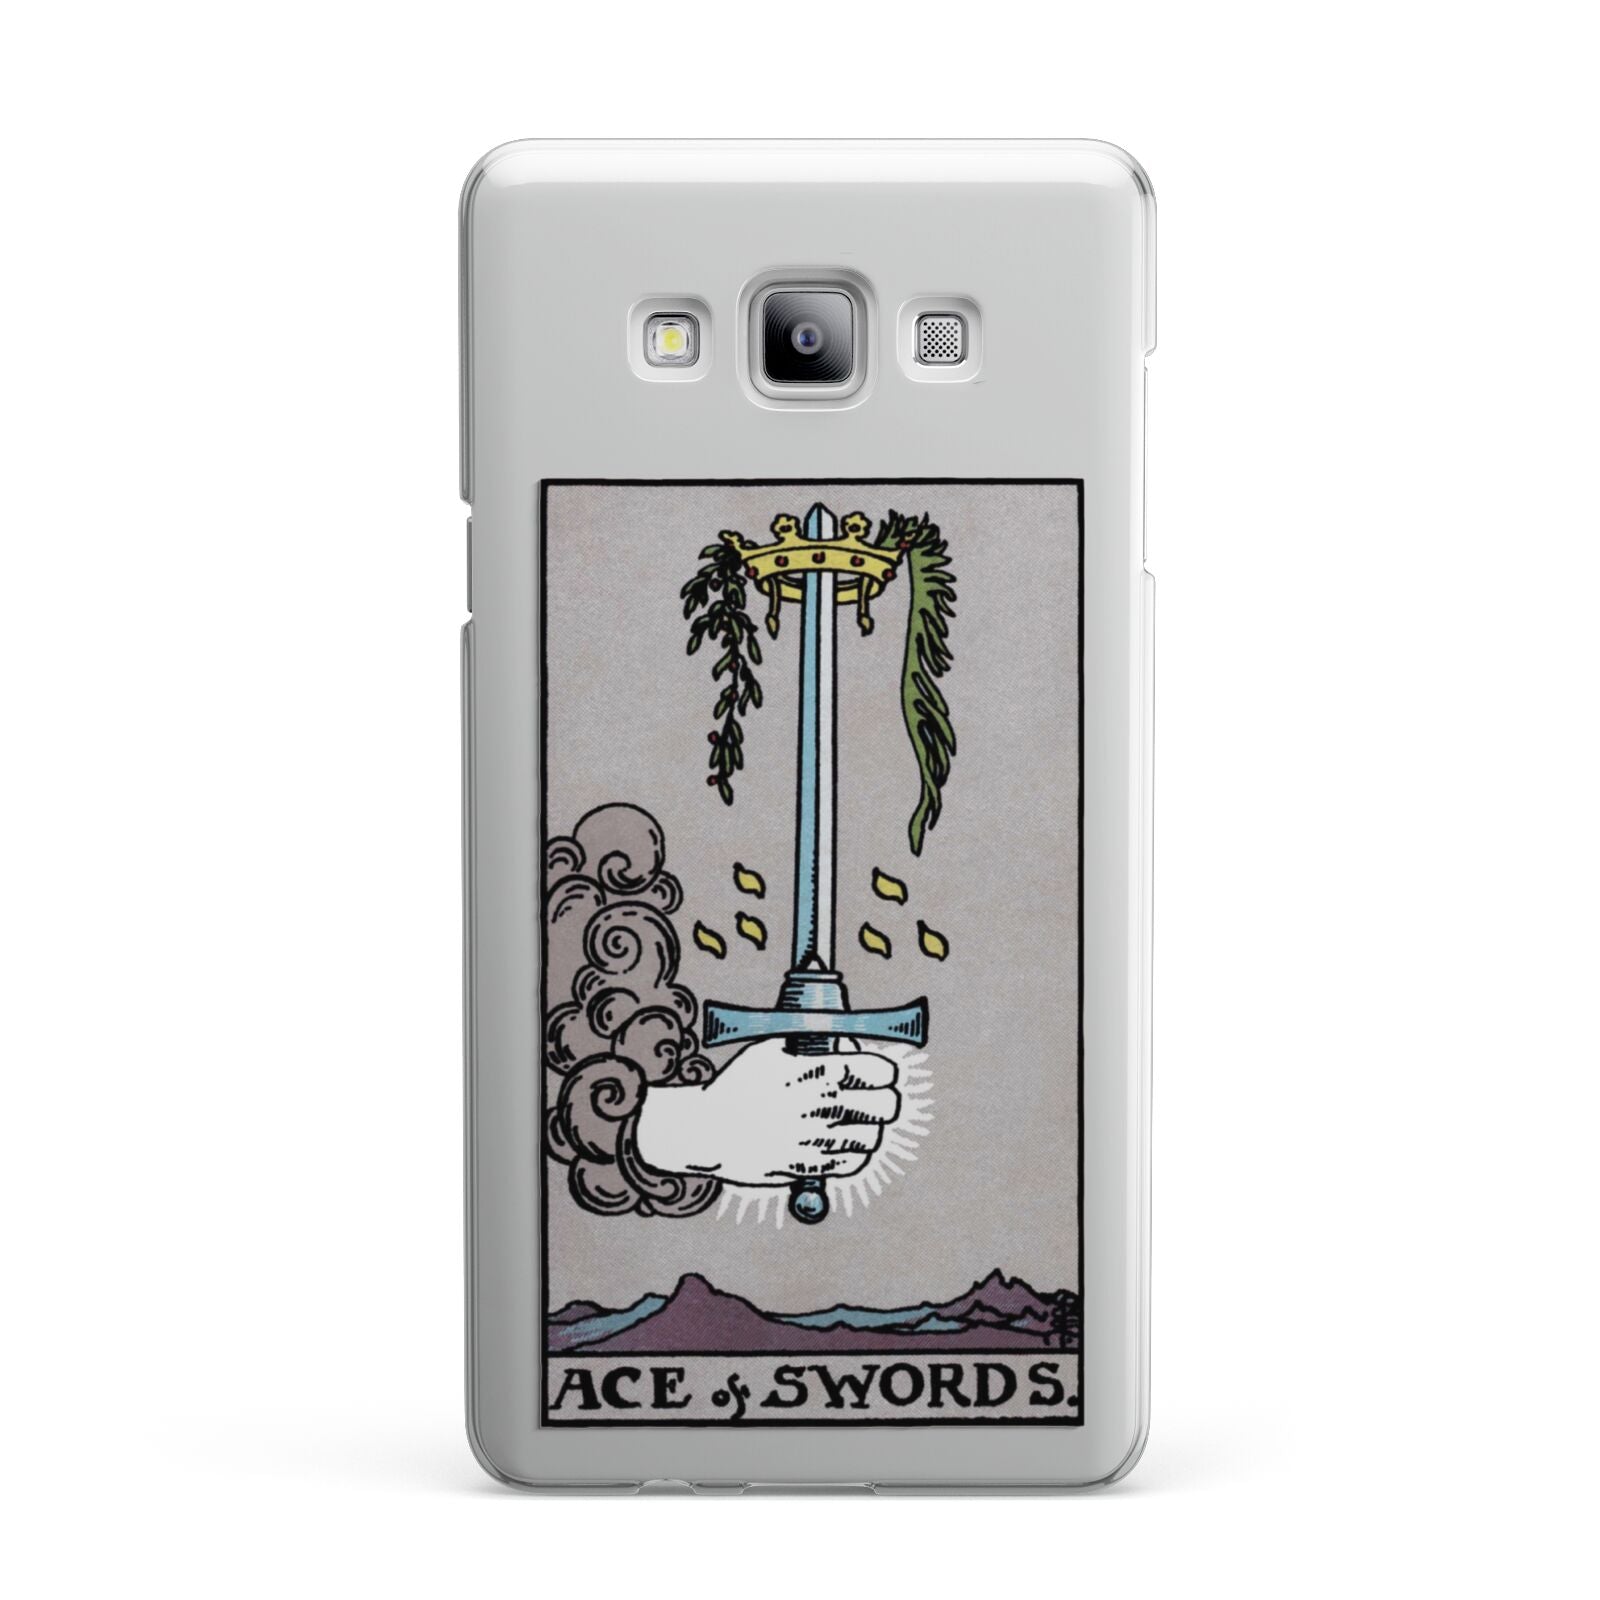 Ace of Swords Tarot Card Samsung Galaxy A7 2015 Case